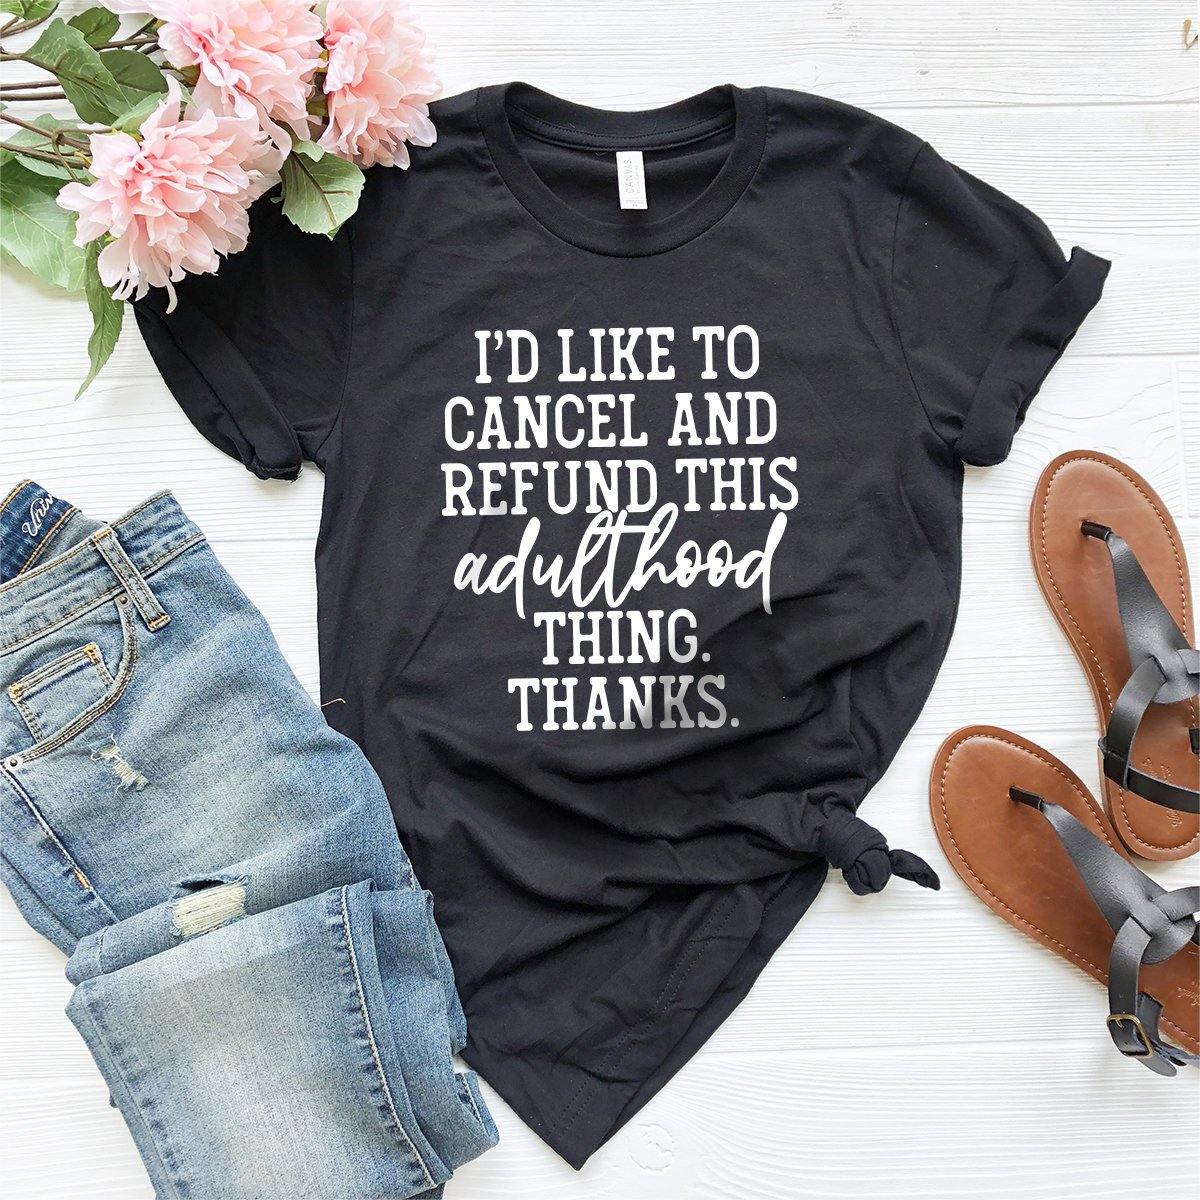 Funny Adulthood Tshirt, Adulthood Thing Shirt, I'd Like To Cancel And Refund This Adulthood Thing Thanks Shirt, Funny Adulting Shirt - Fastdeliverytees.com